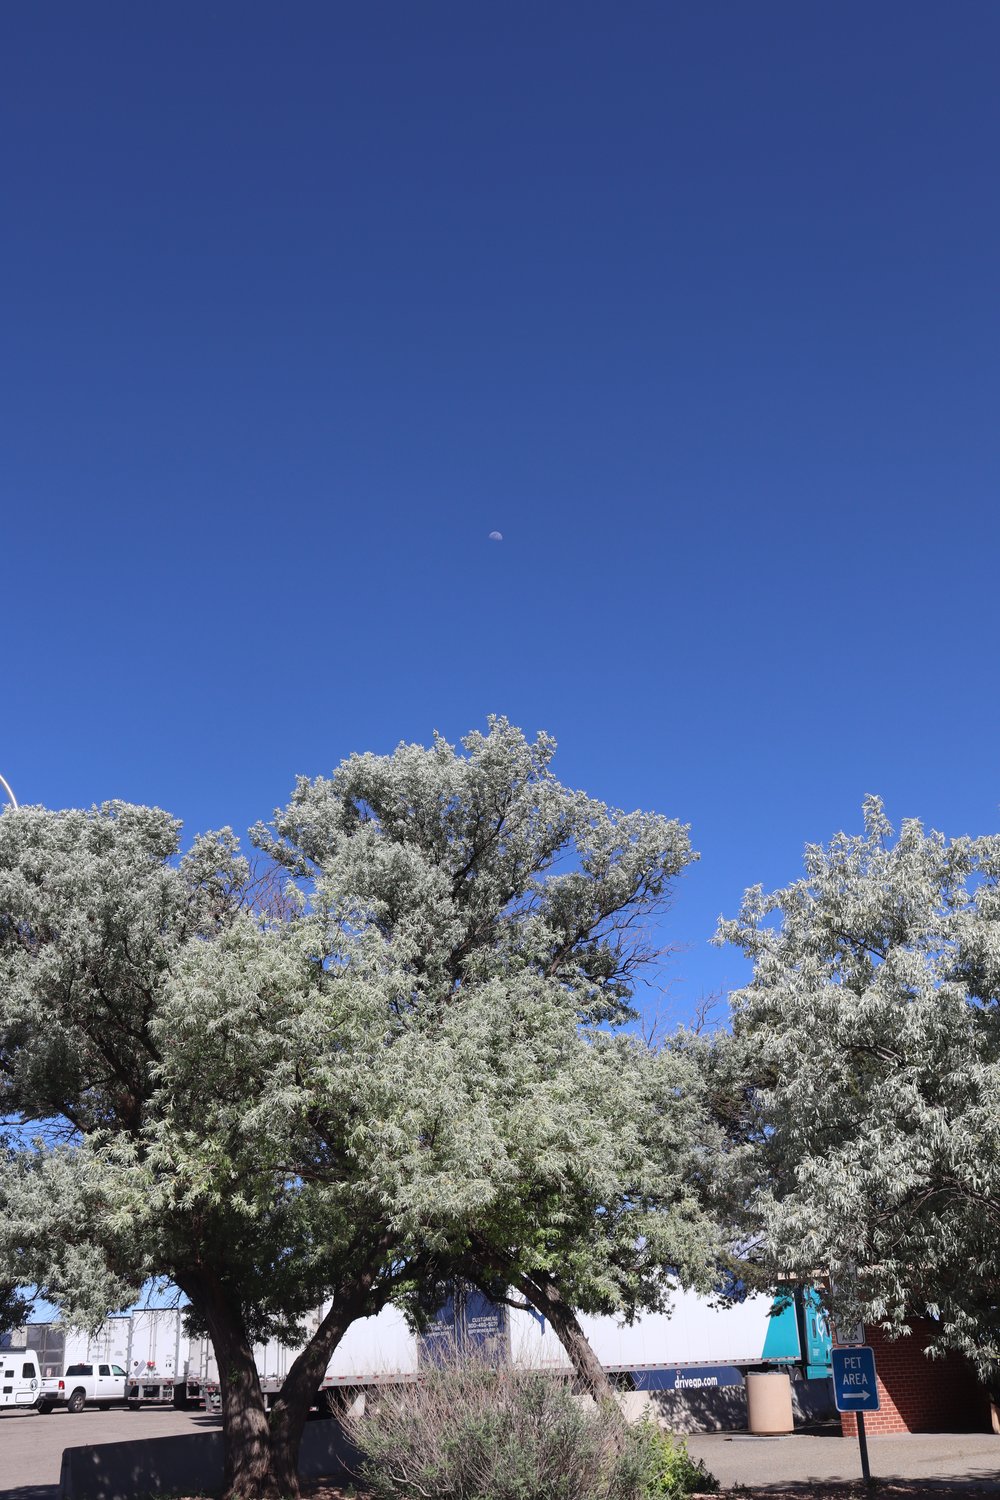 Daytime moon in beautiful blue NM sky.